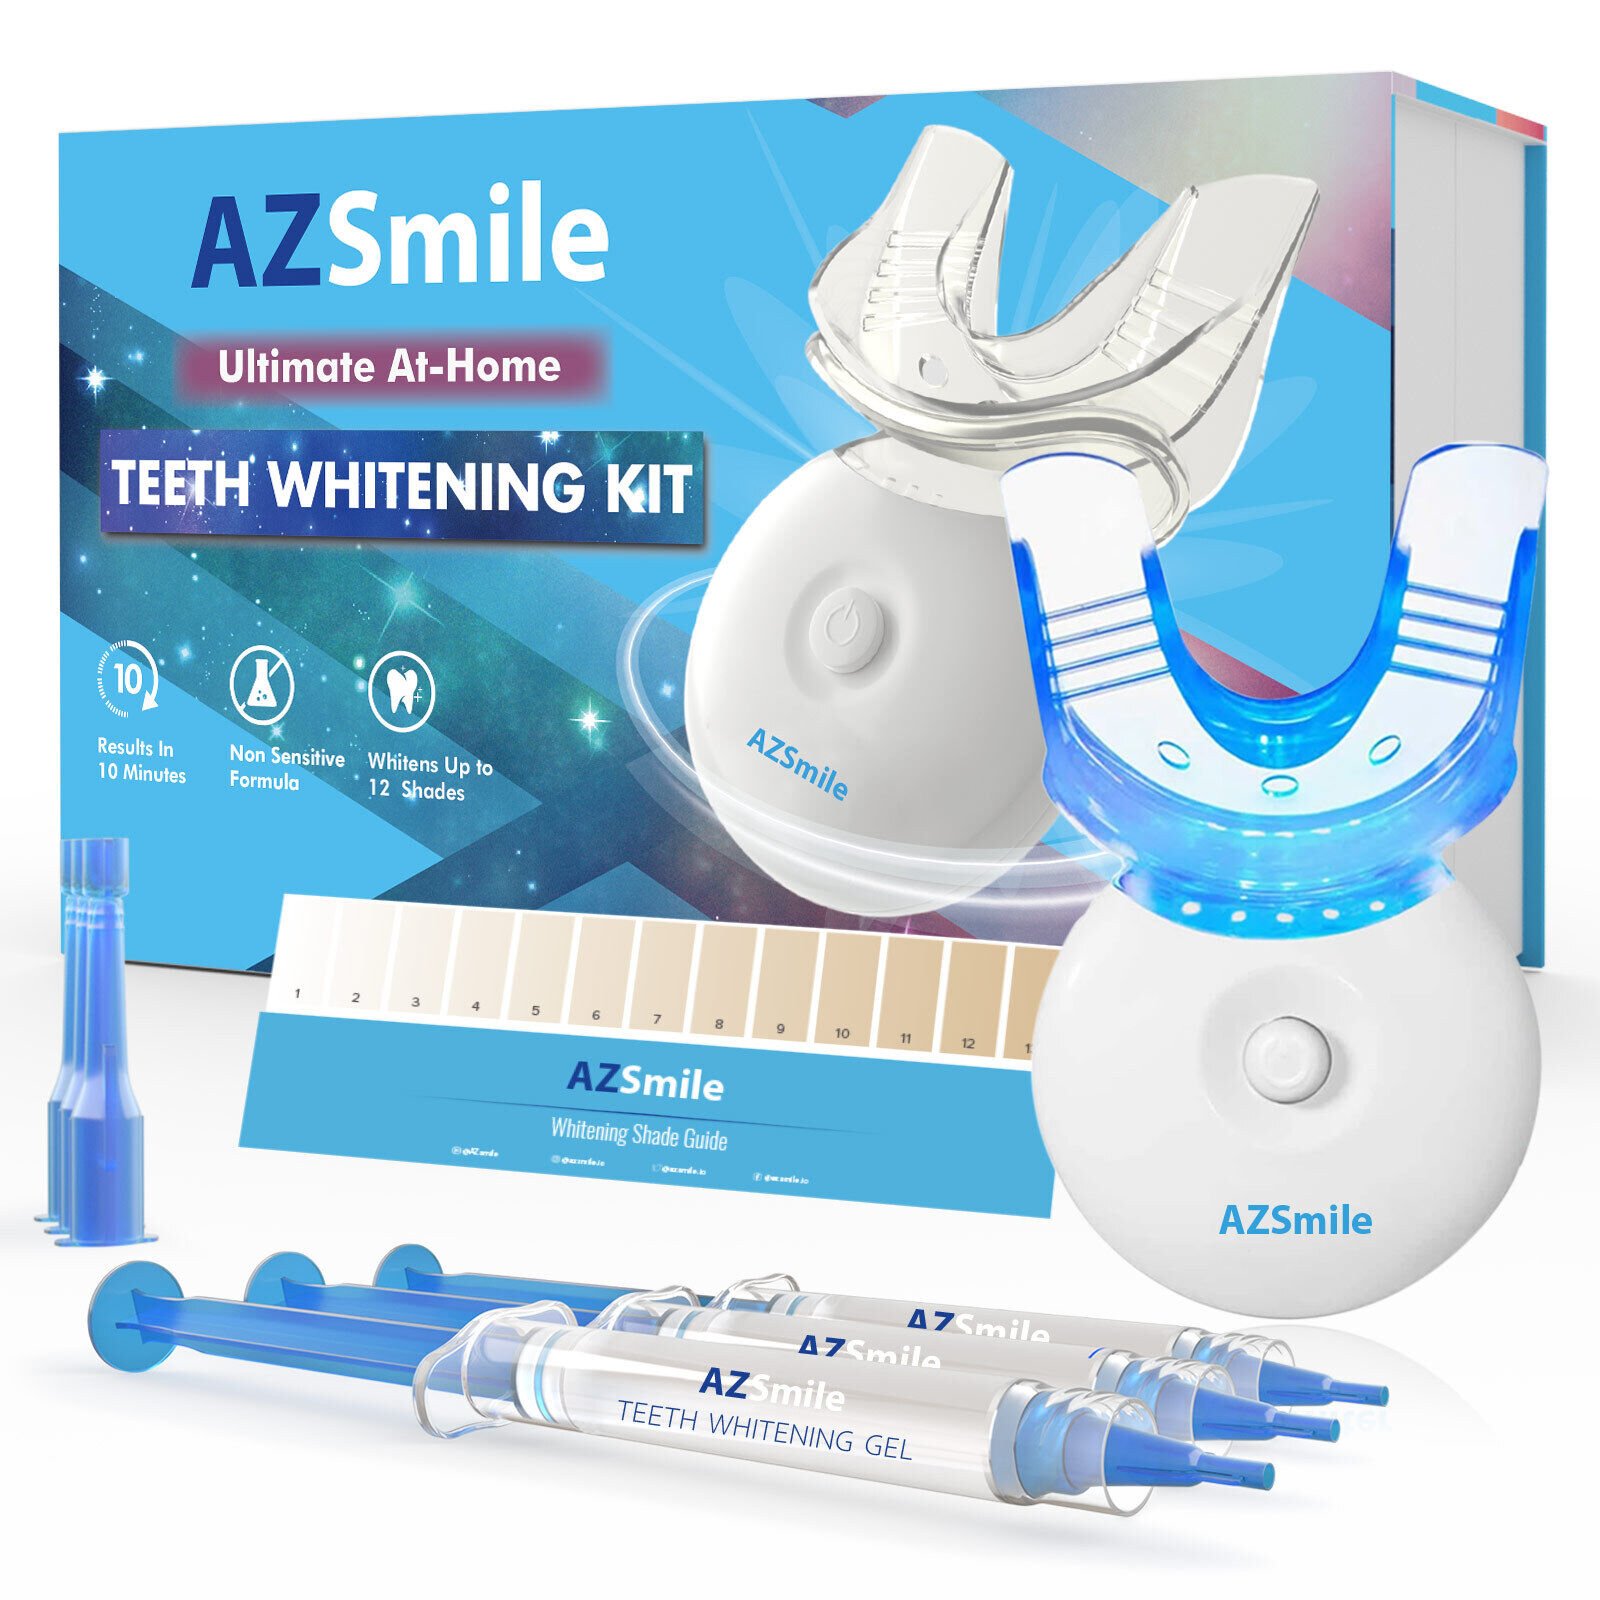 AZSmile 44%CP Teeth Whitening.…